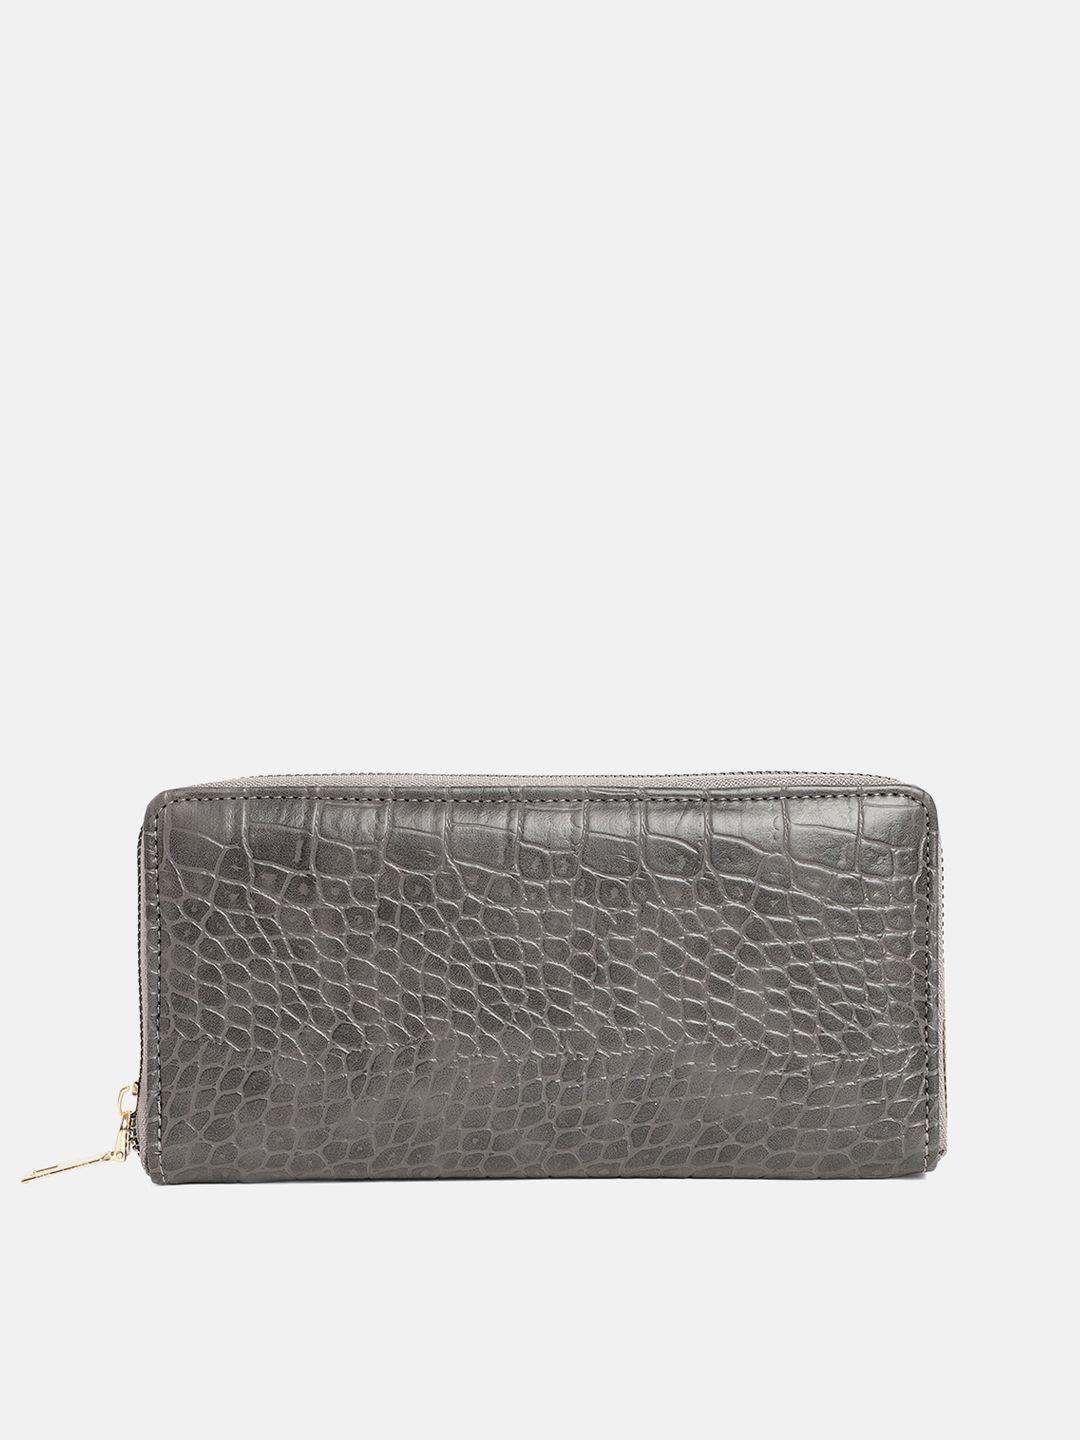 miaz lifestyle women grey textured leather zip around wallet